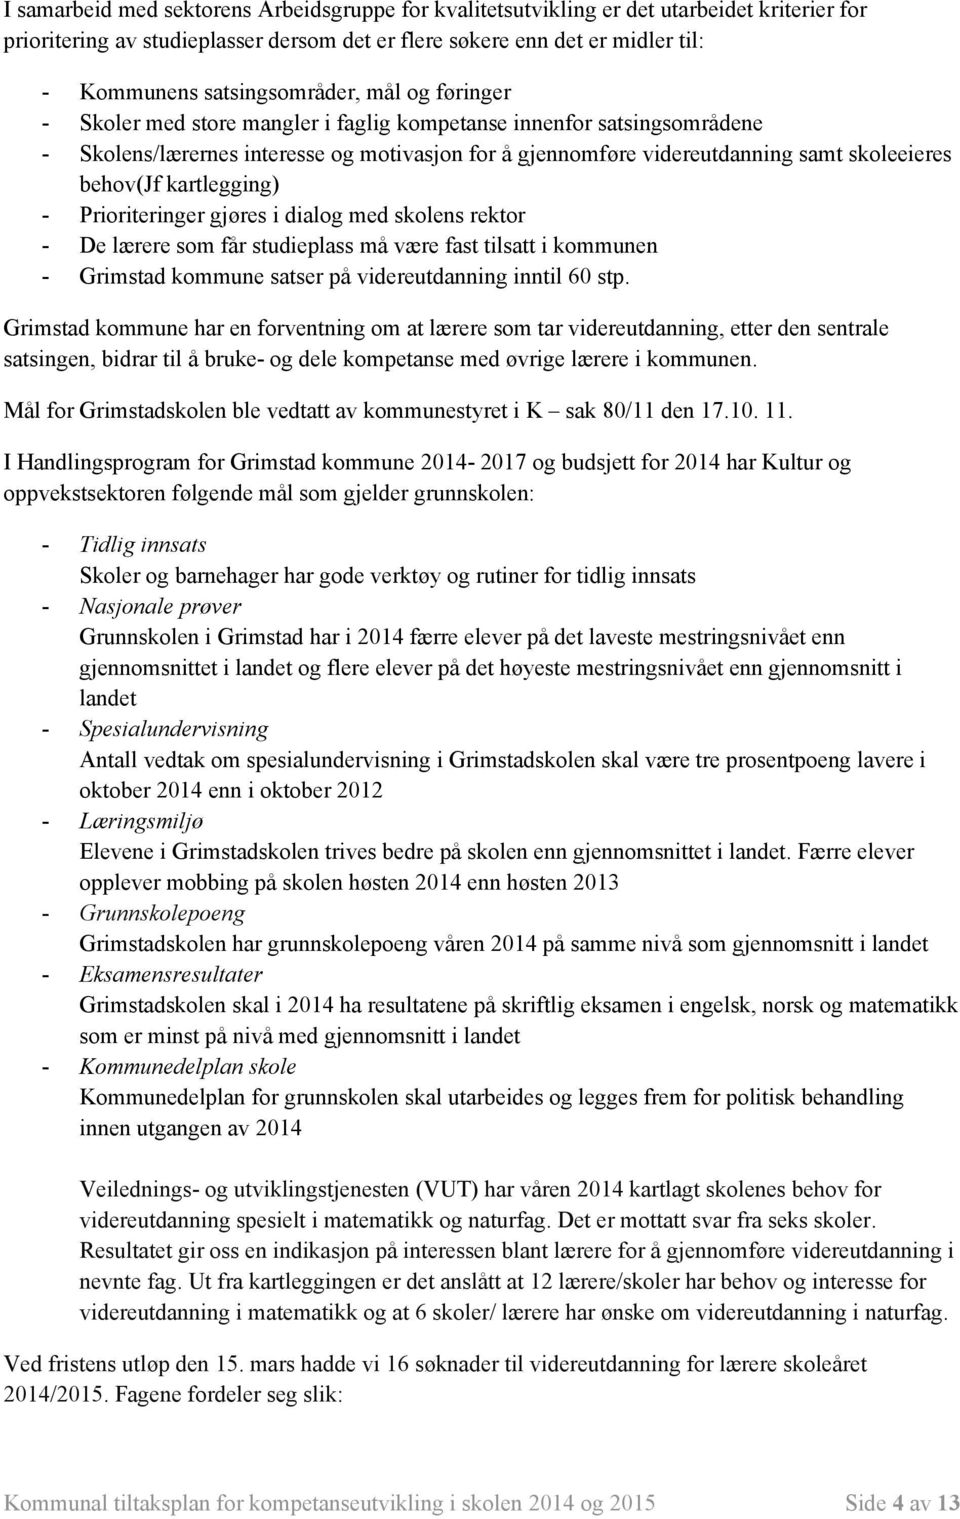 behov(jf kartlegging) - Prioriteringer gjøres i dialog med skolens rektor - De lærere som får studieplass må være fast tilsatt i kommunen - Grimstad kommune satser på videreutdanning inntil 60 stp.